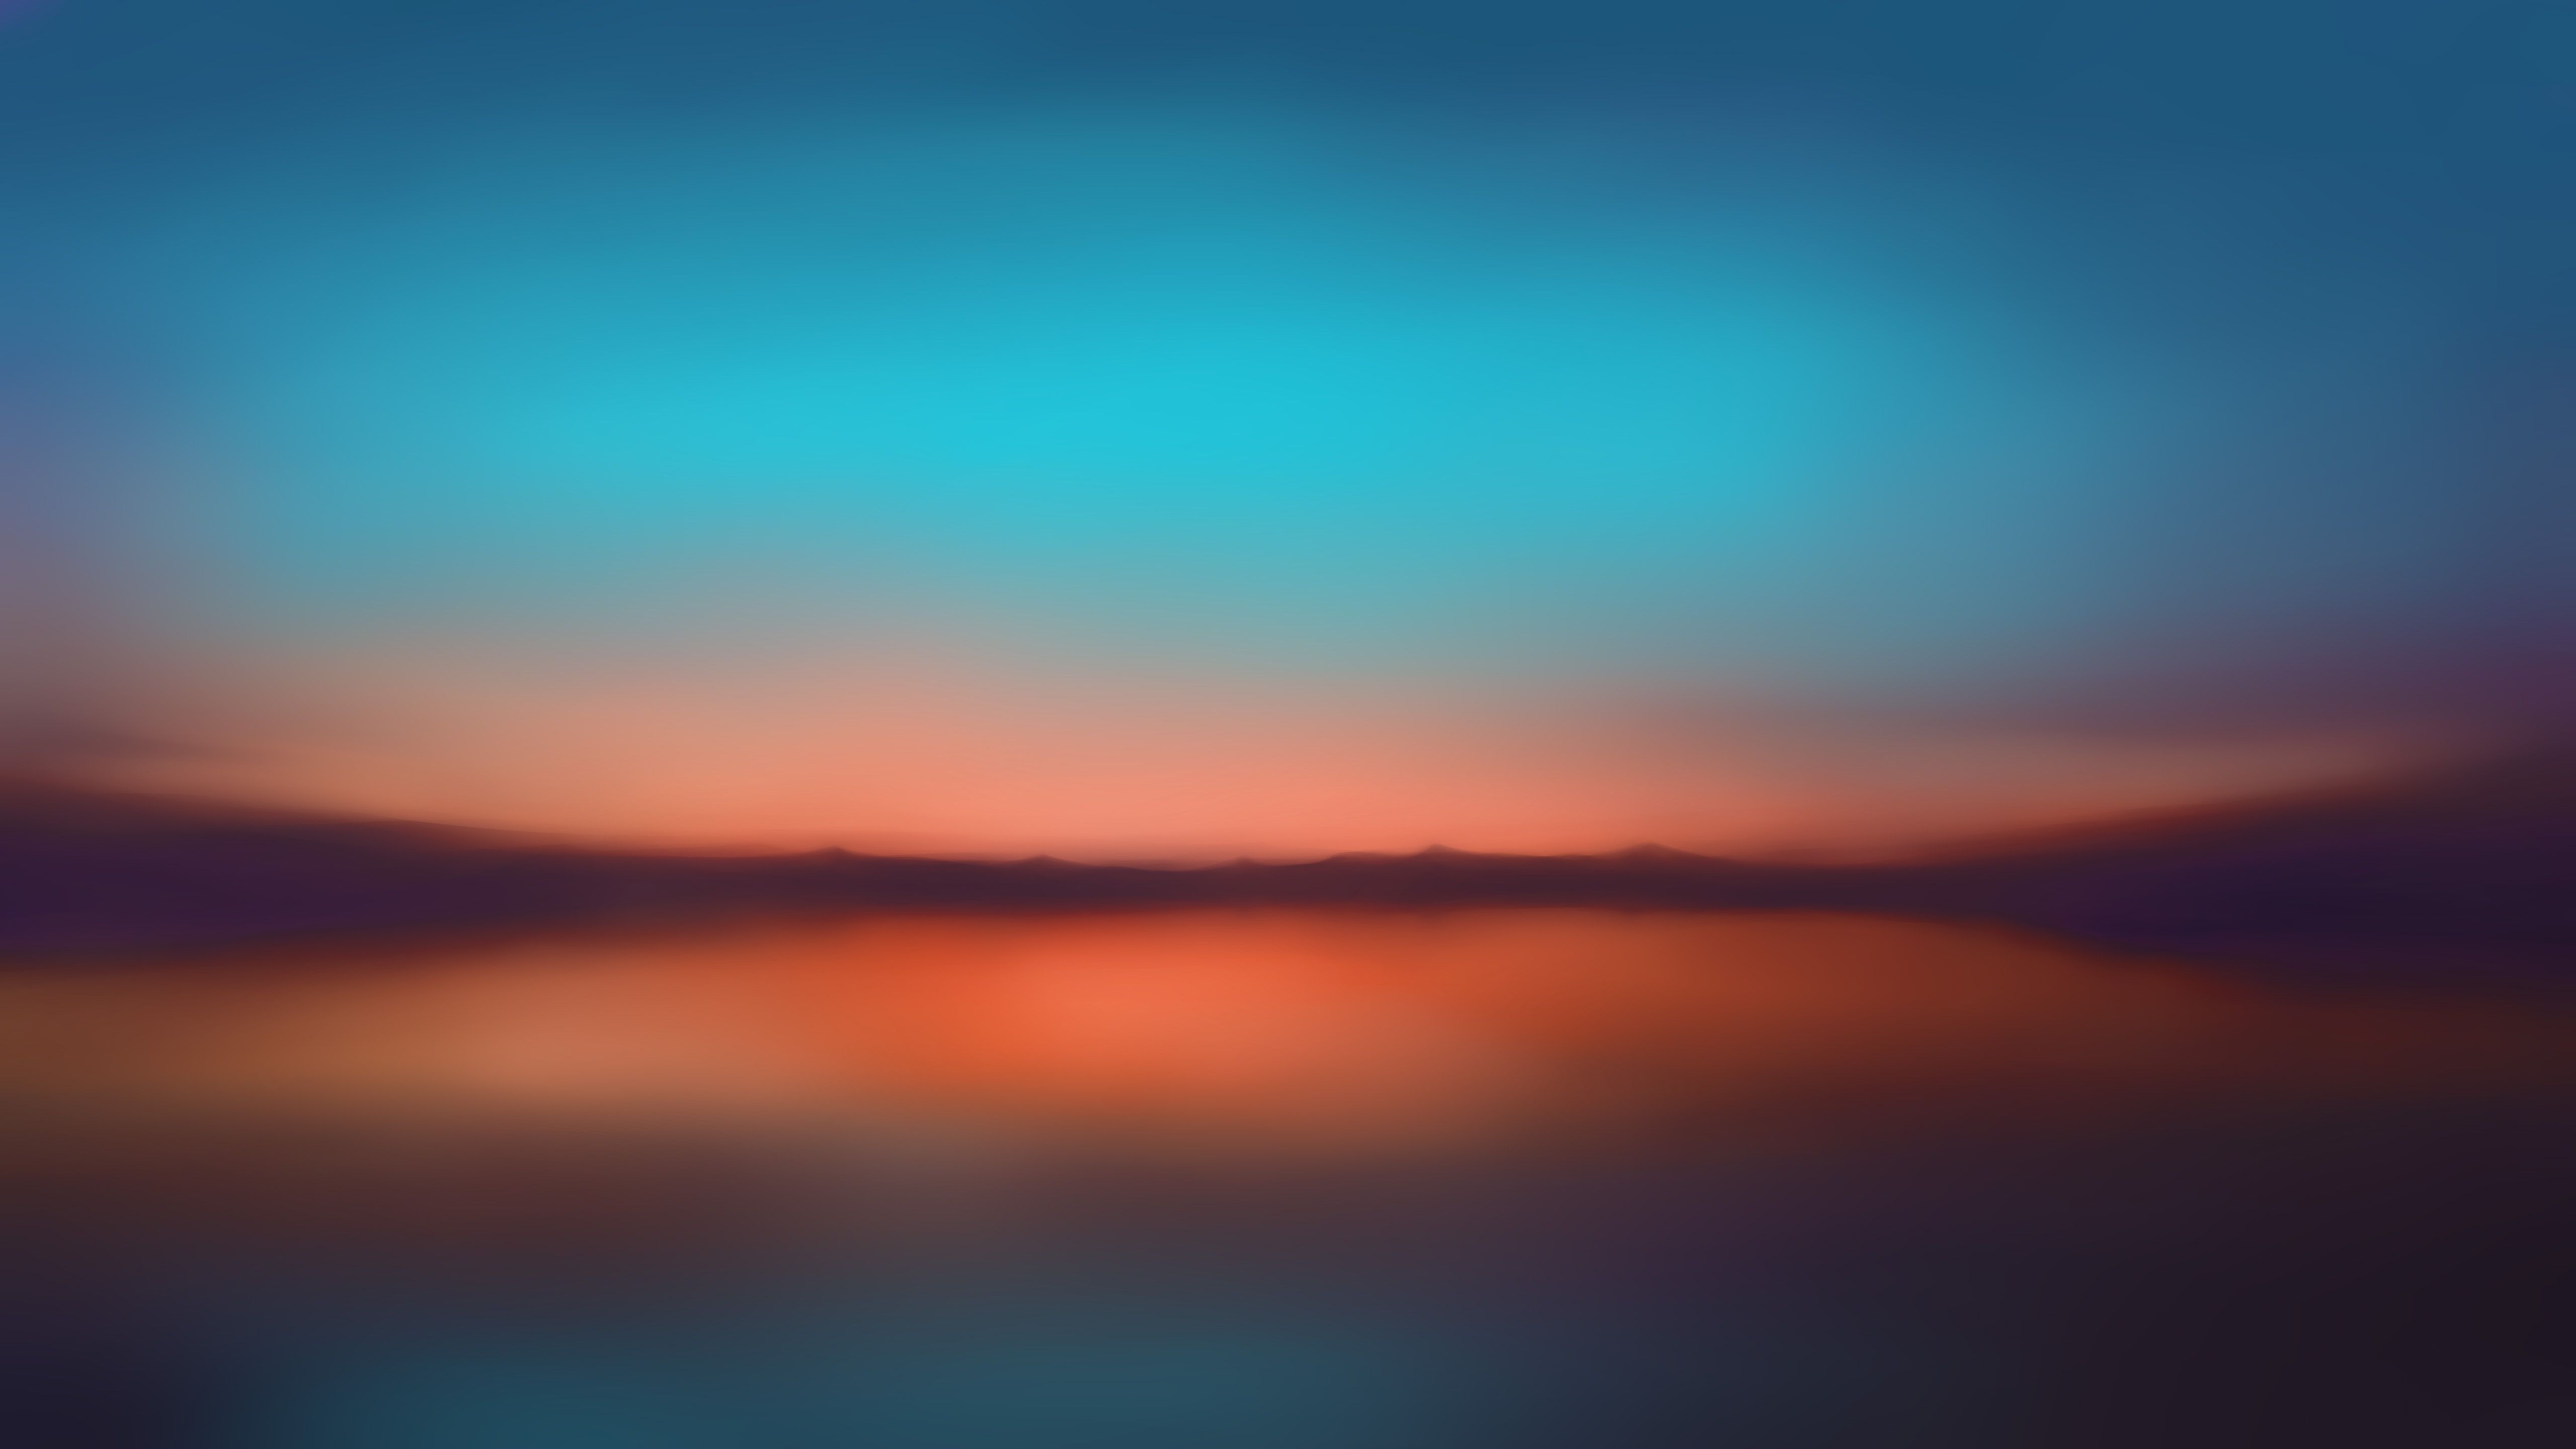 Orange Sunset Blur Minimalist 5k, HD Artist, 4k Wallpaper, Image